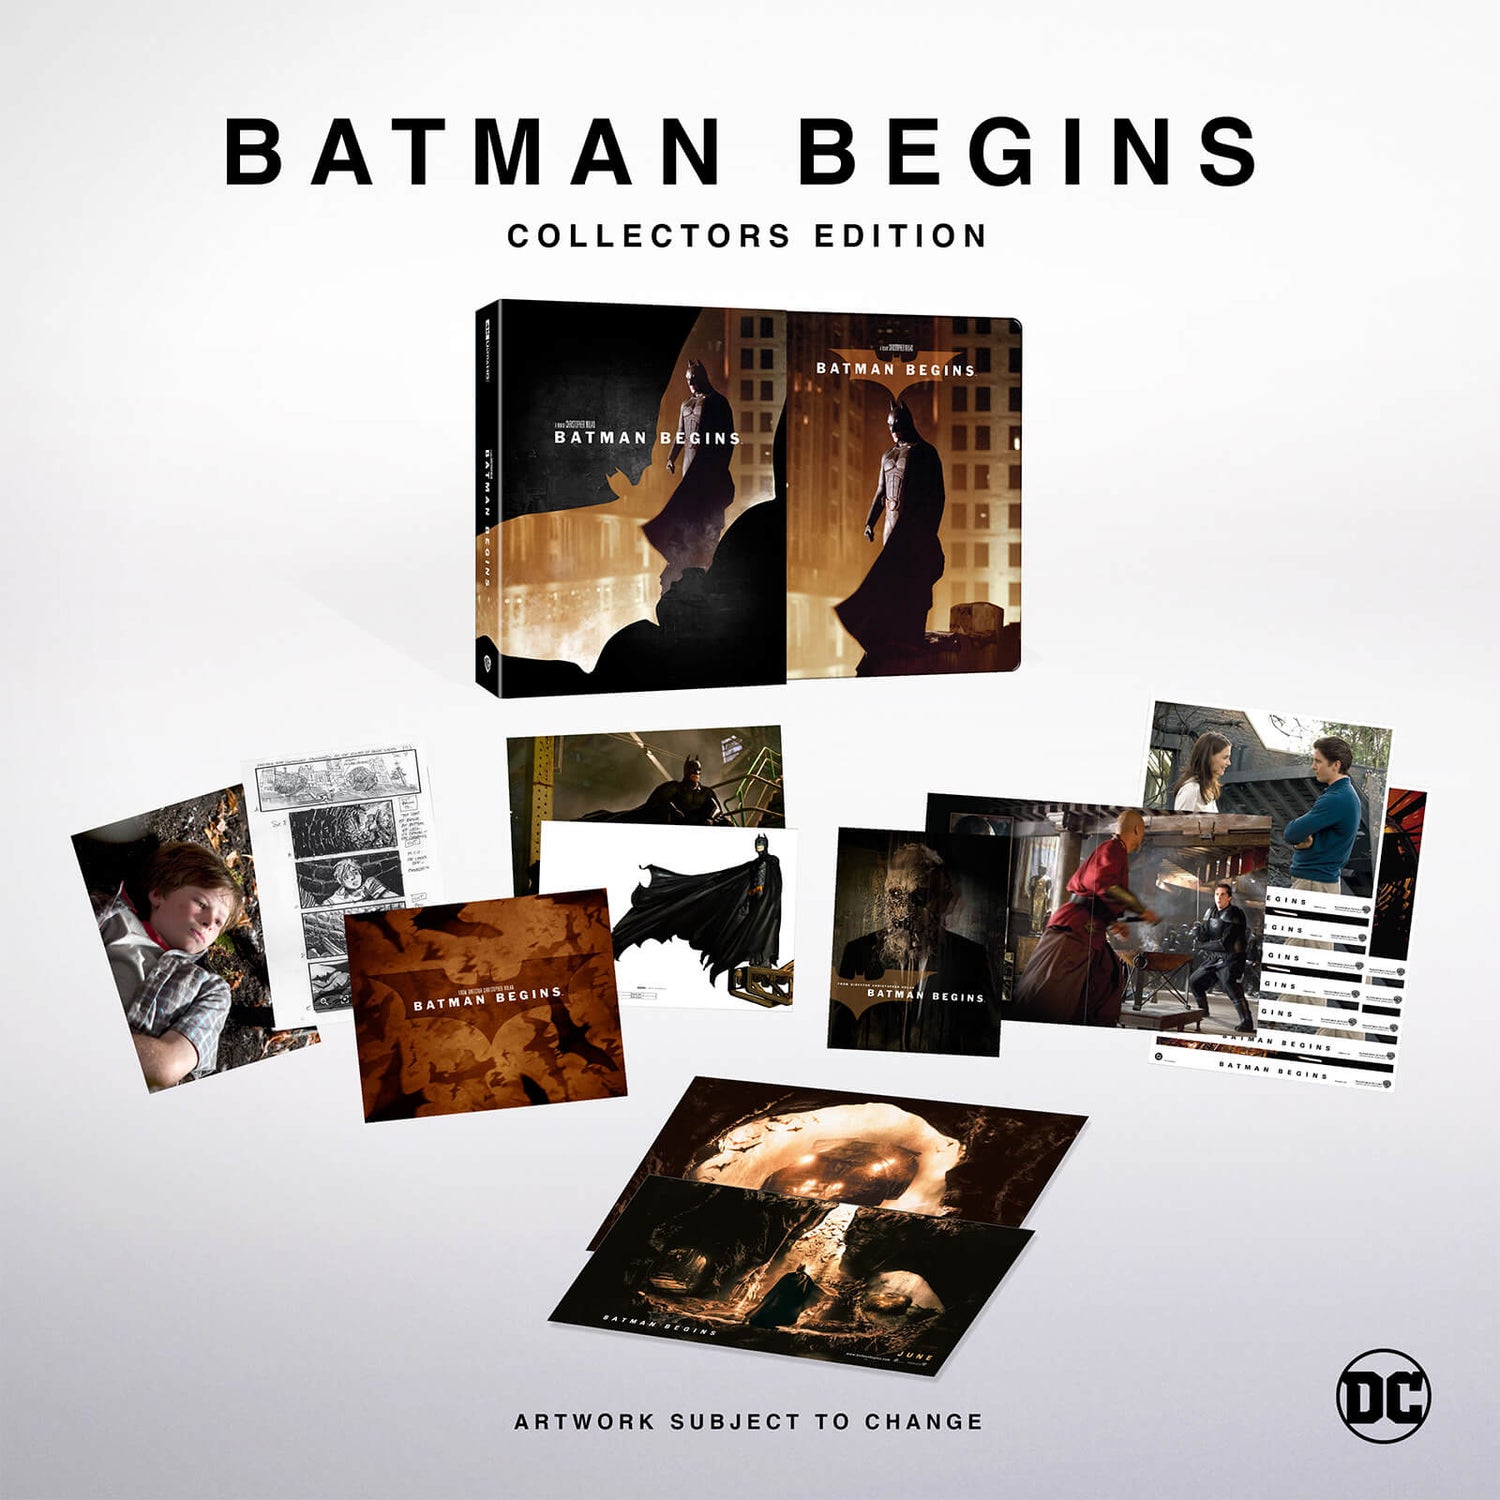 Batman Begins Ultimate Collector's Edition 4K Ultra HD Steelbook